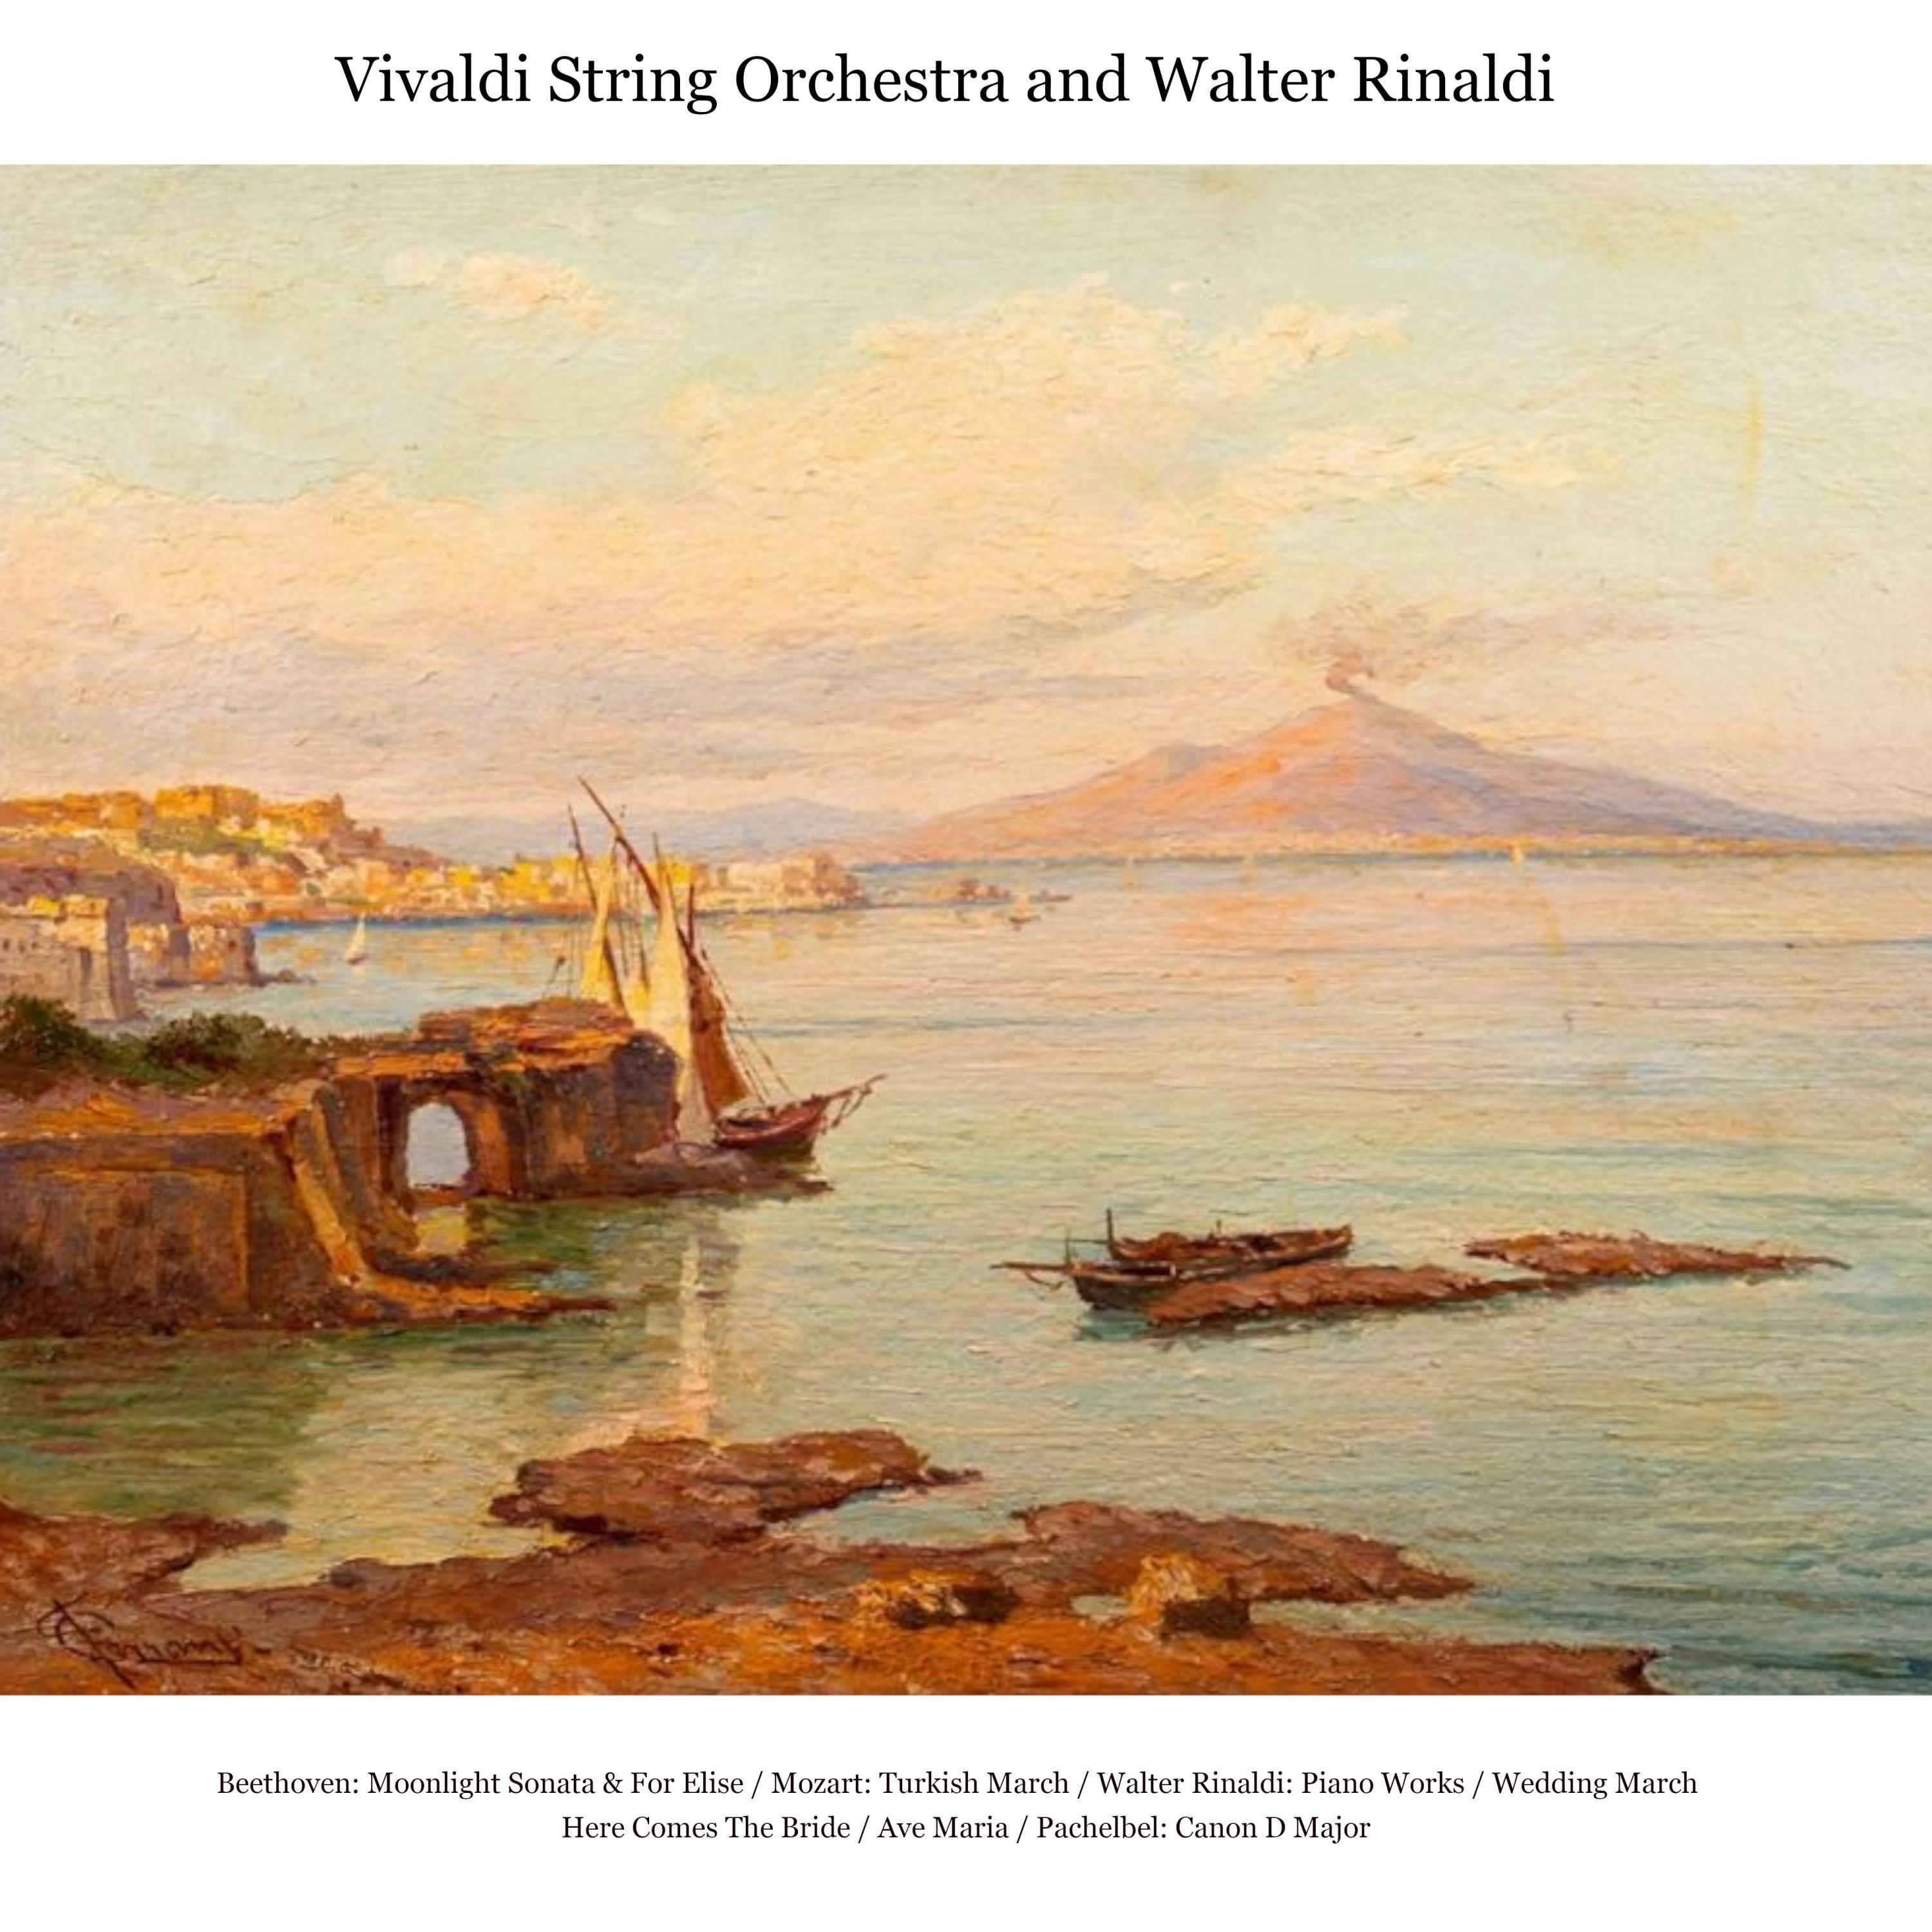 Walter Rinaldi - Turkish March, Piano Sonata No. 11 in a Major, K331: III. Rondò